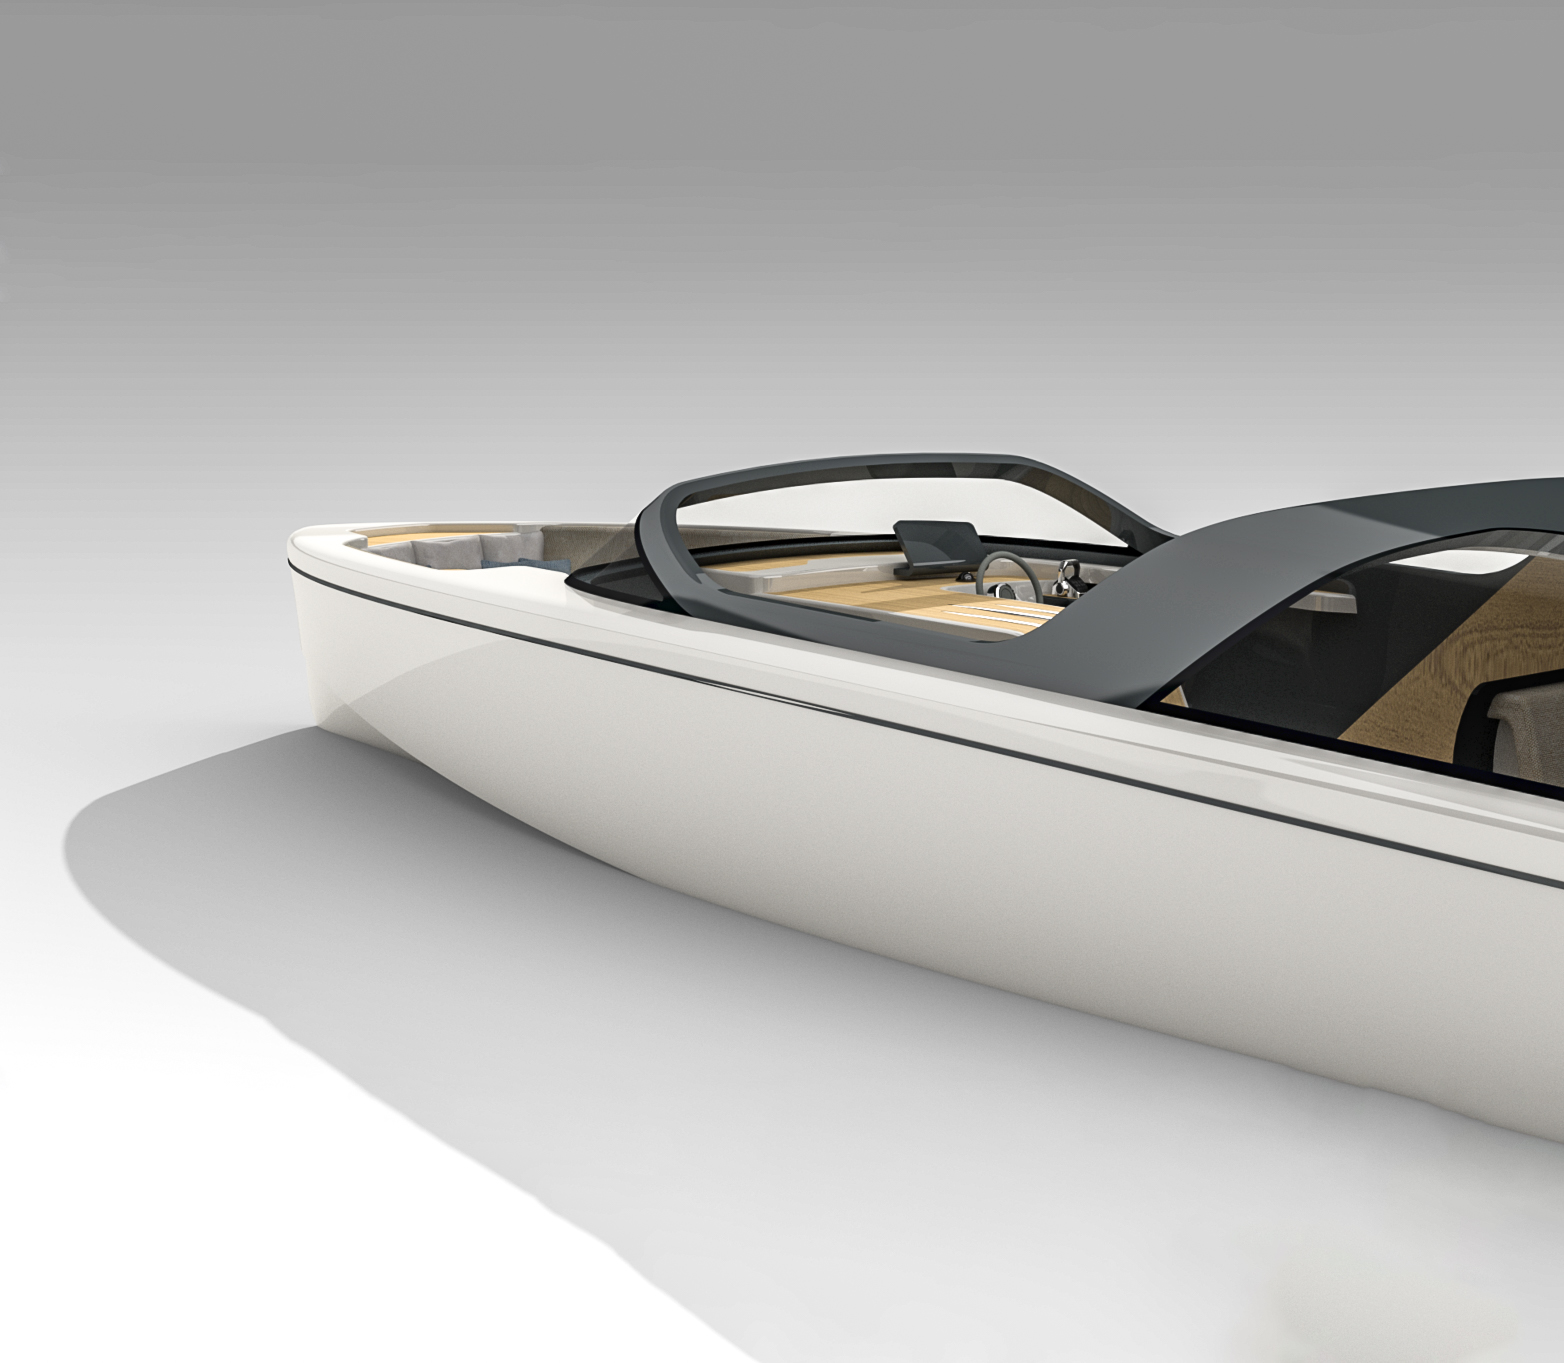 hydrofoil yacht tender